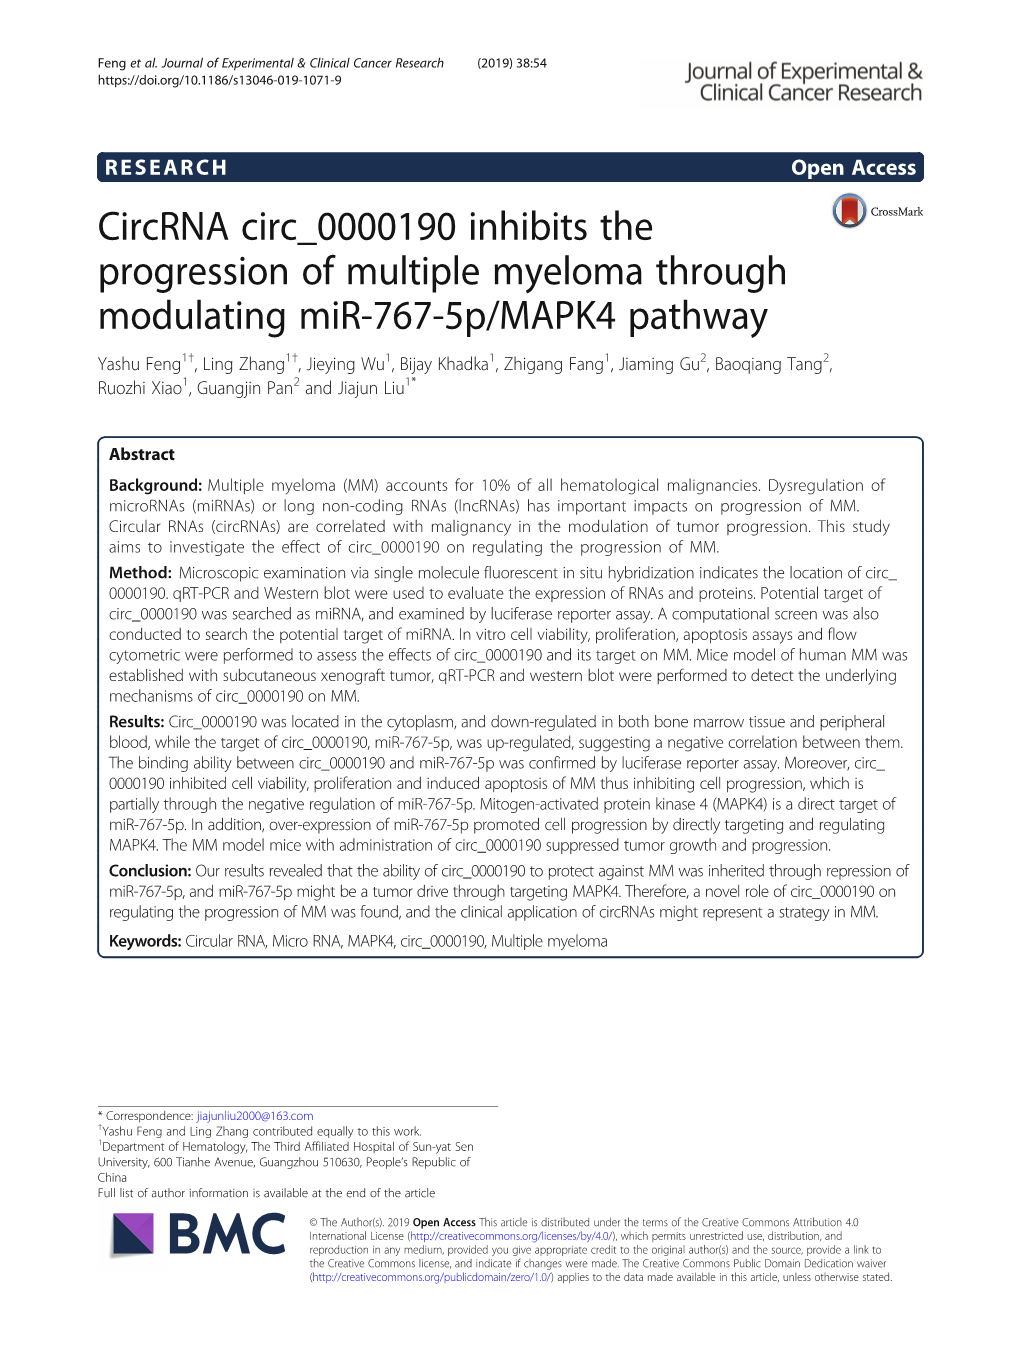 Circrna Circ 0000190 Inhibits the Progression of Multiple Myeloma